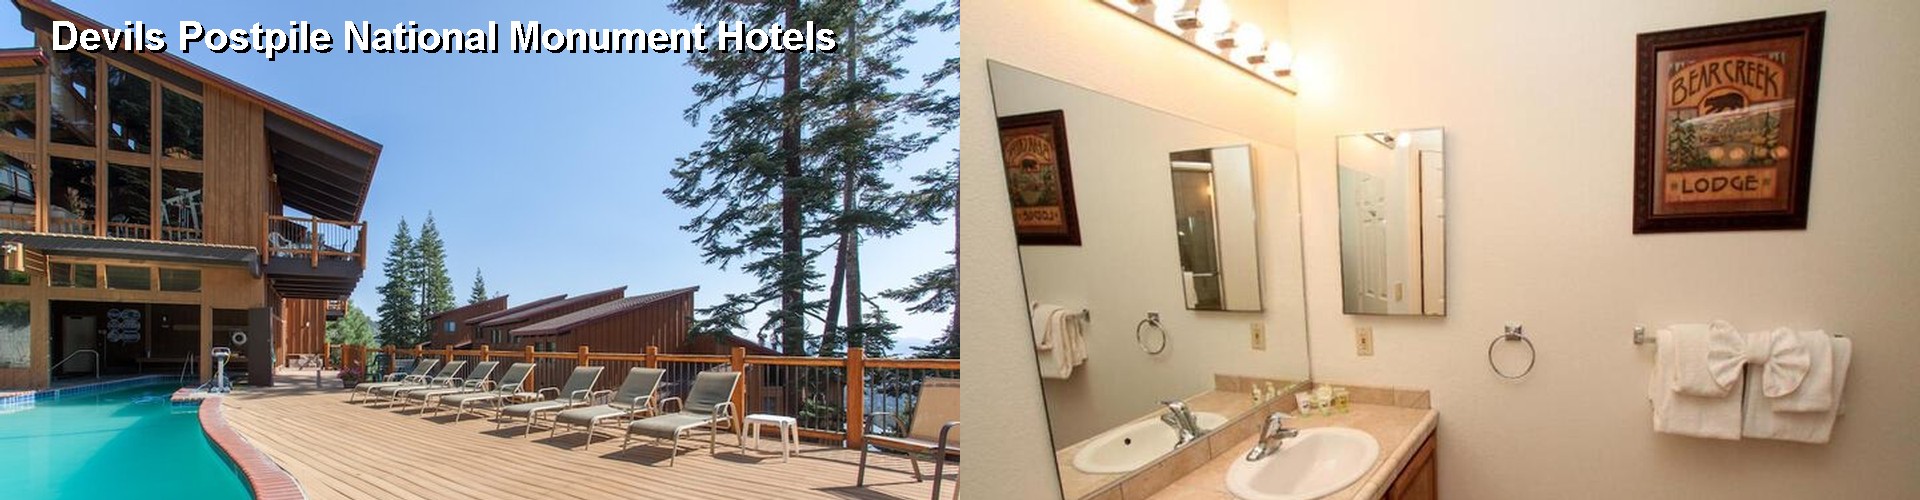 4 Best Hotels near Devils Postpile National Monument